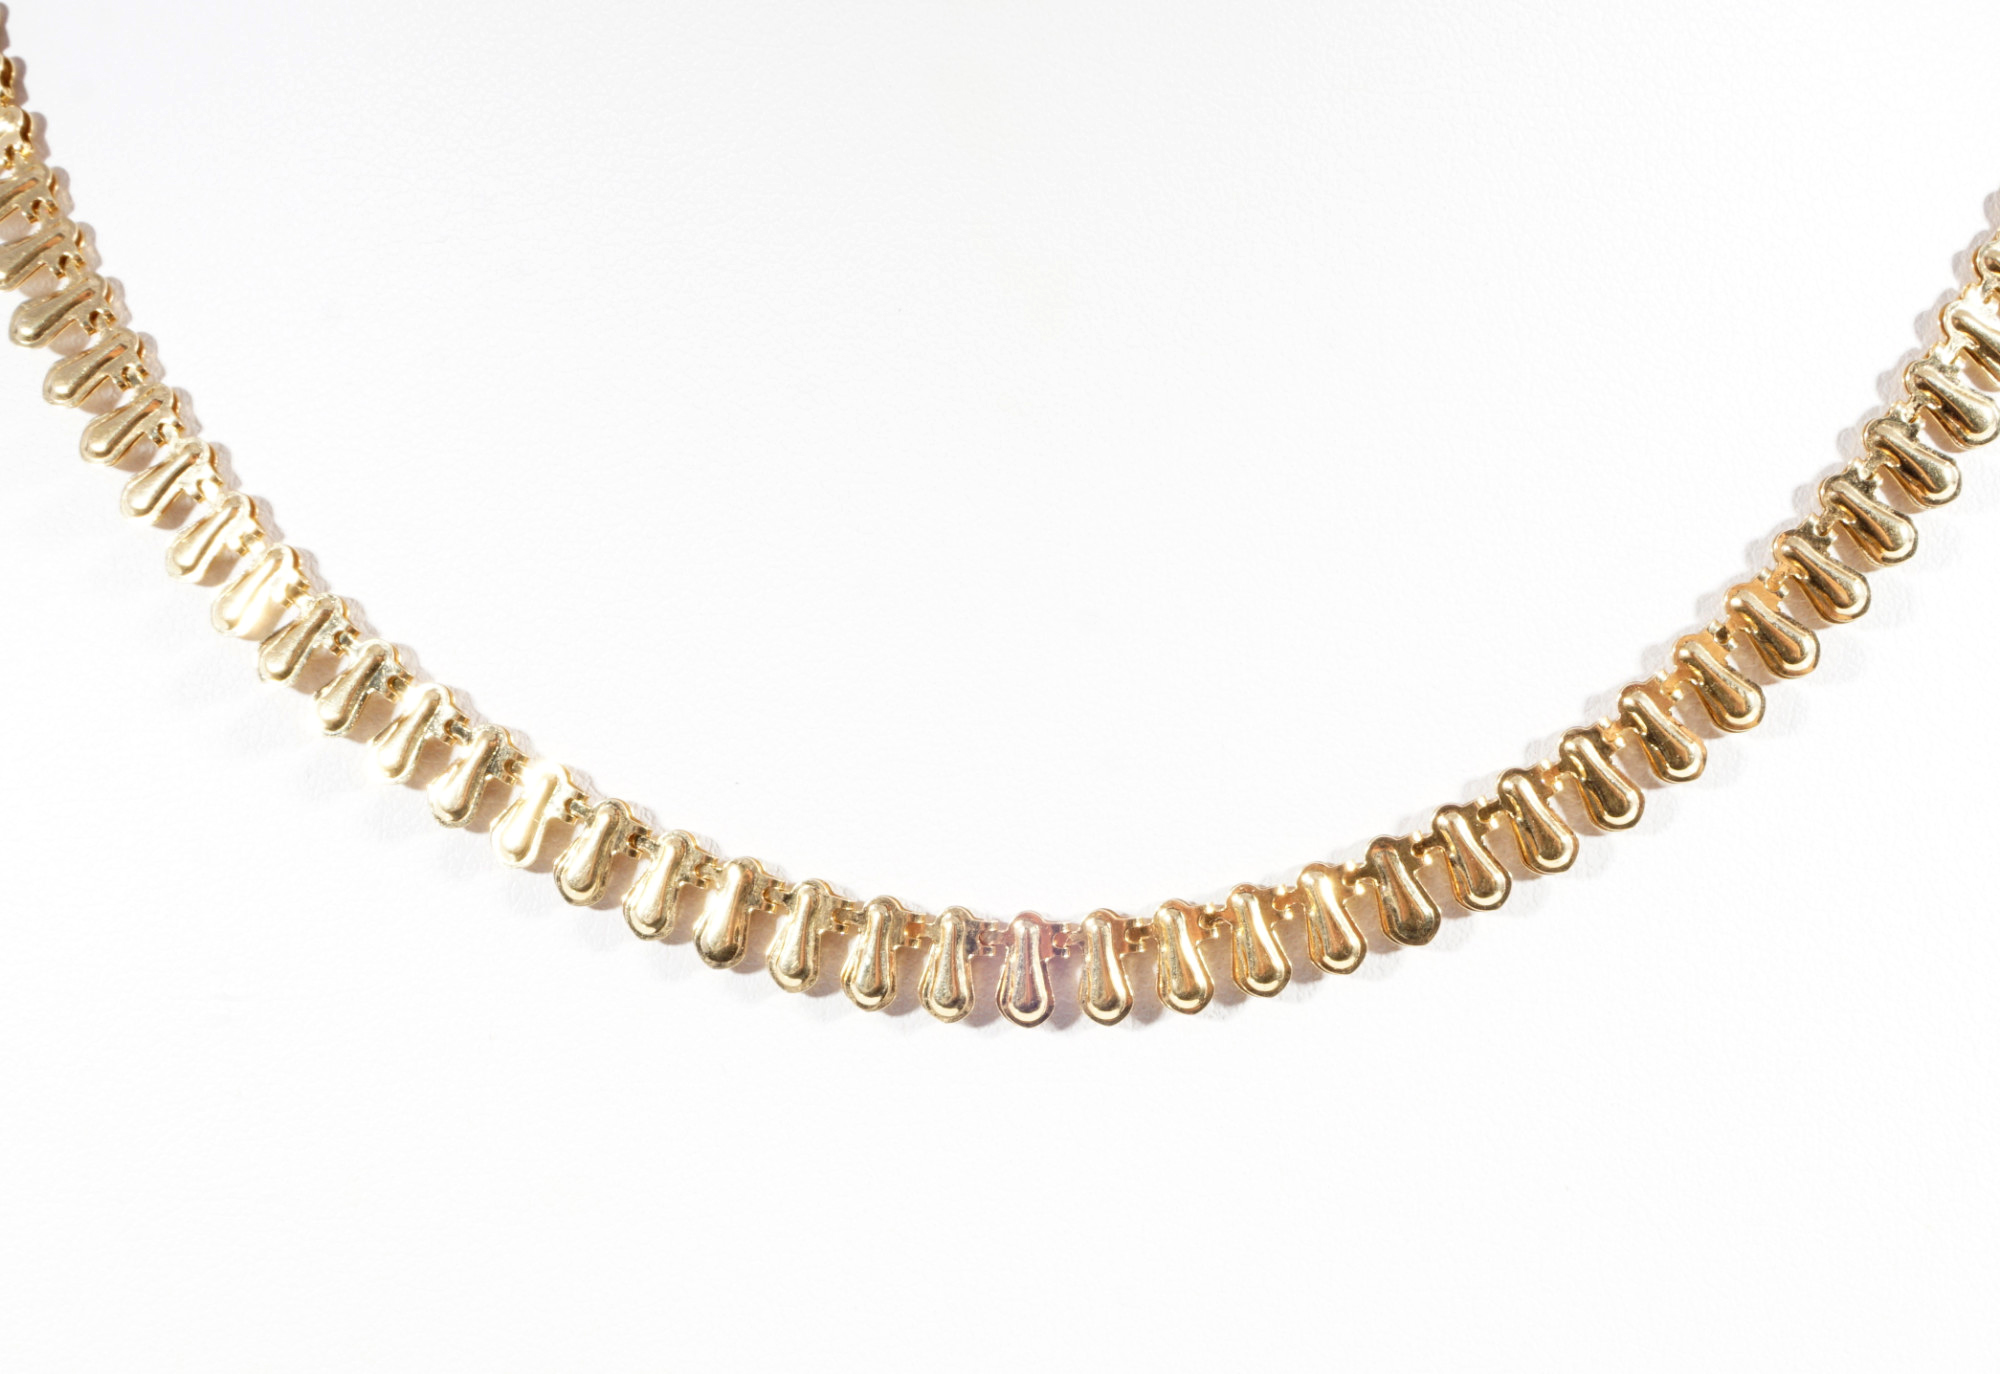 750 gold necklace in drop shape, 18K Gold Collier / Halskette in Tropenform, - Image 3 of 4